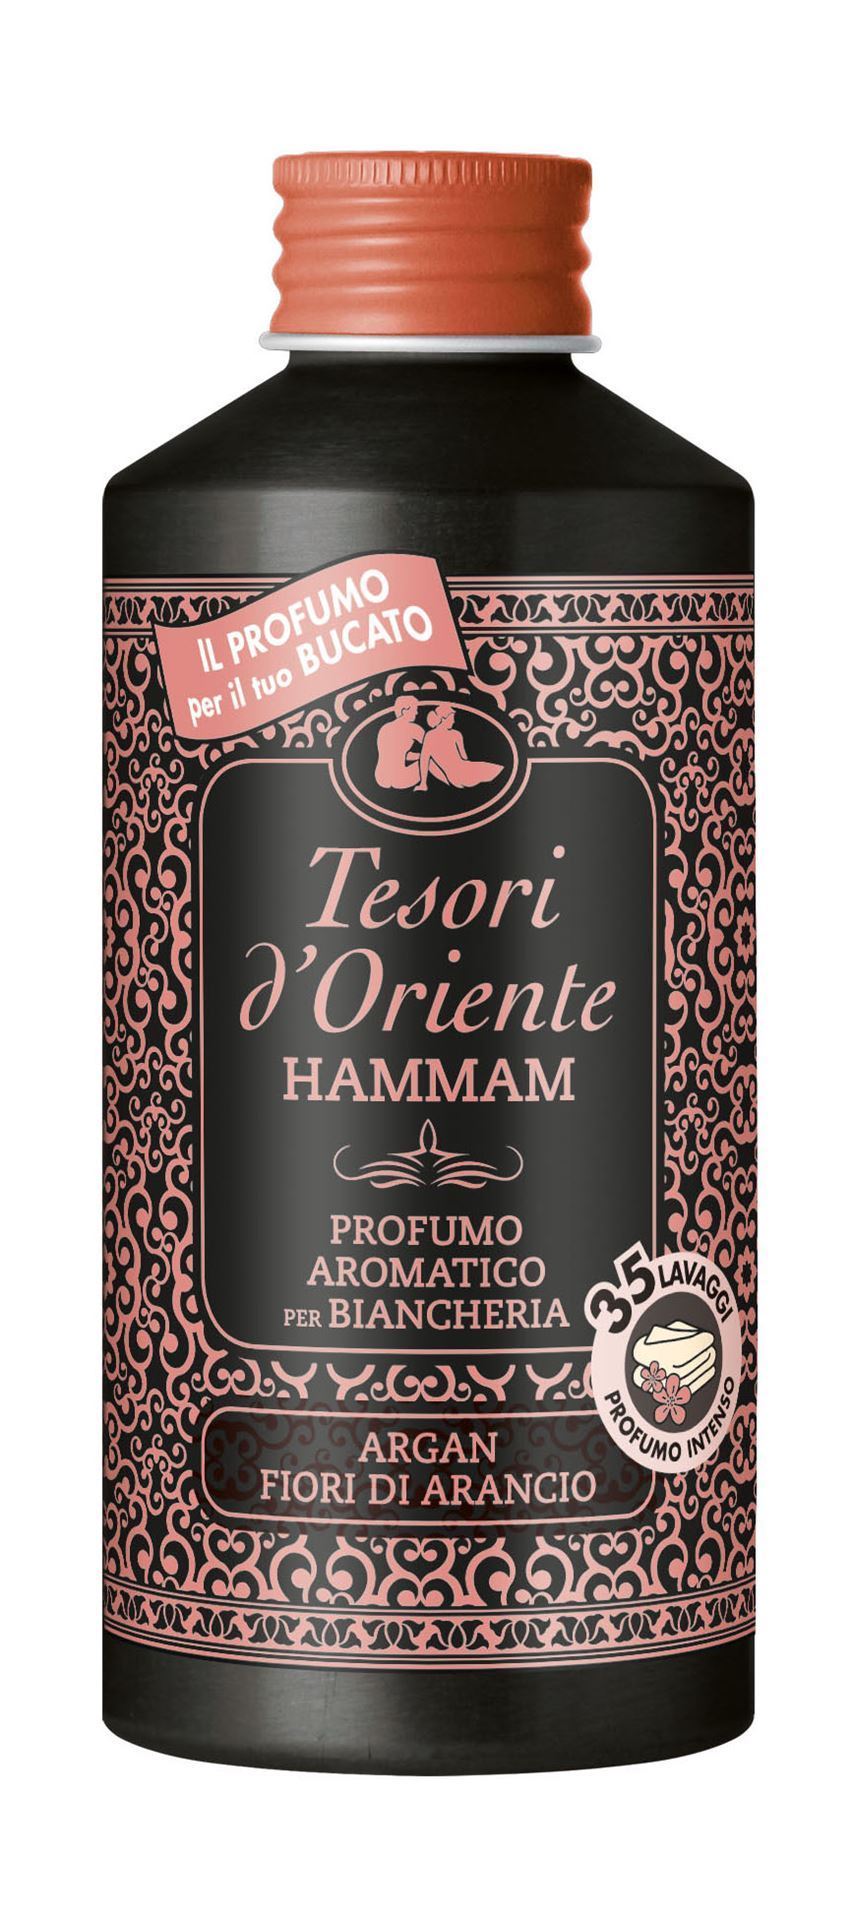 Tesori D ́oriente Hammam - Laundry Perfume - Volume: 250 ml